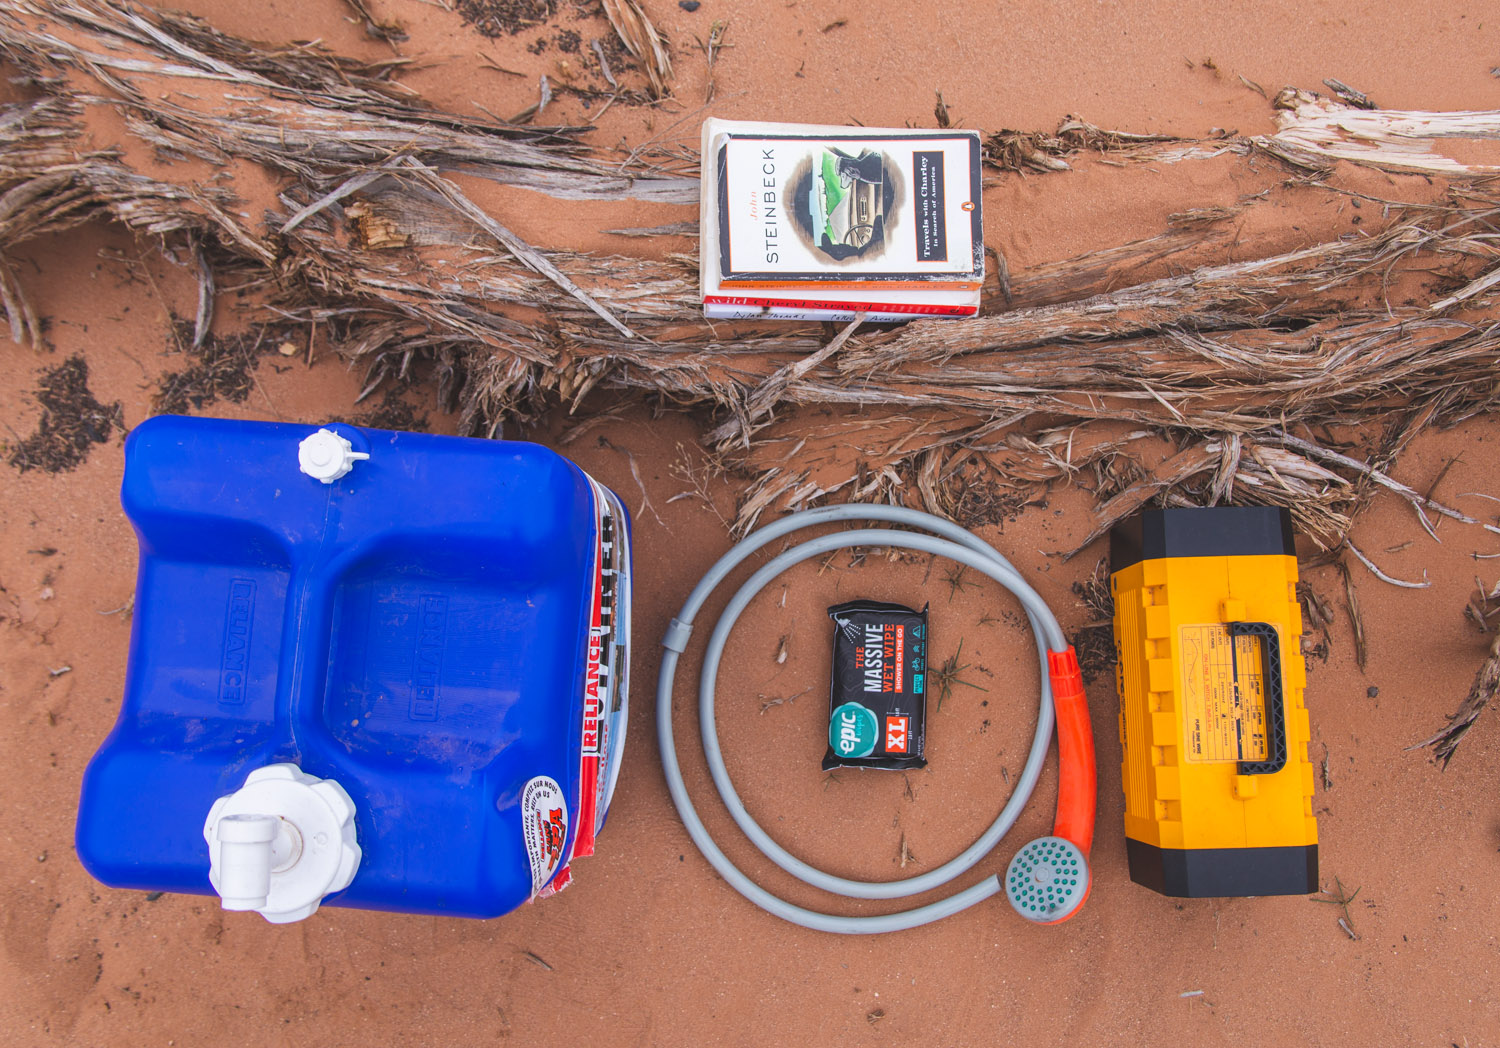 Alexandra's five things posed on orange sand of the Utah desert